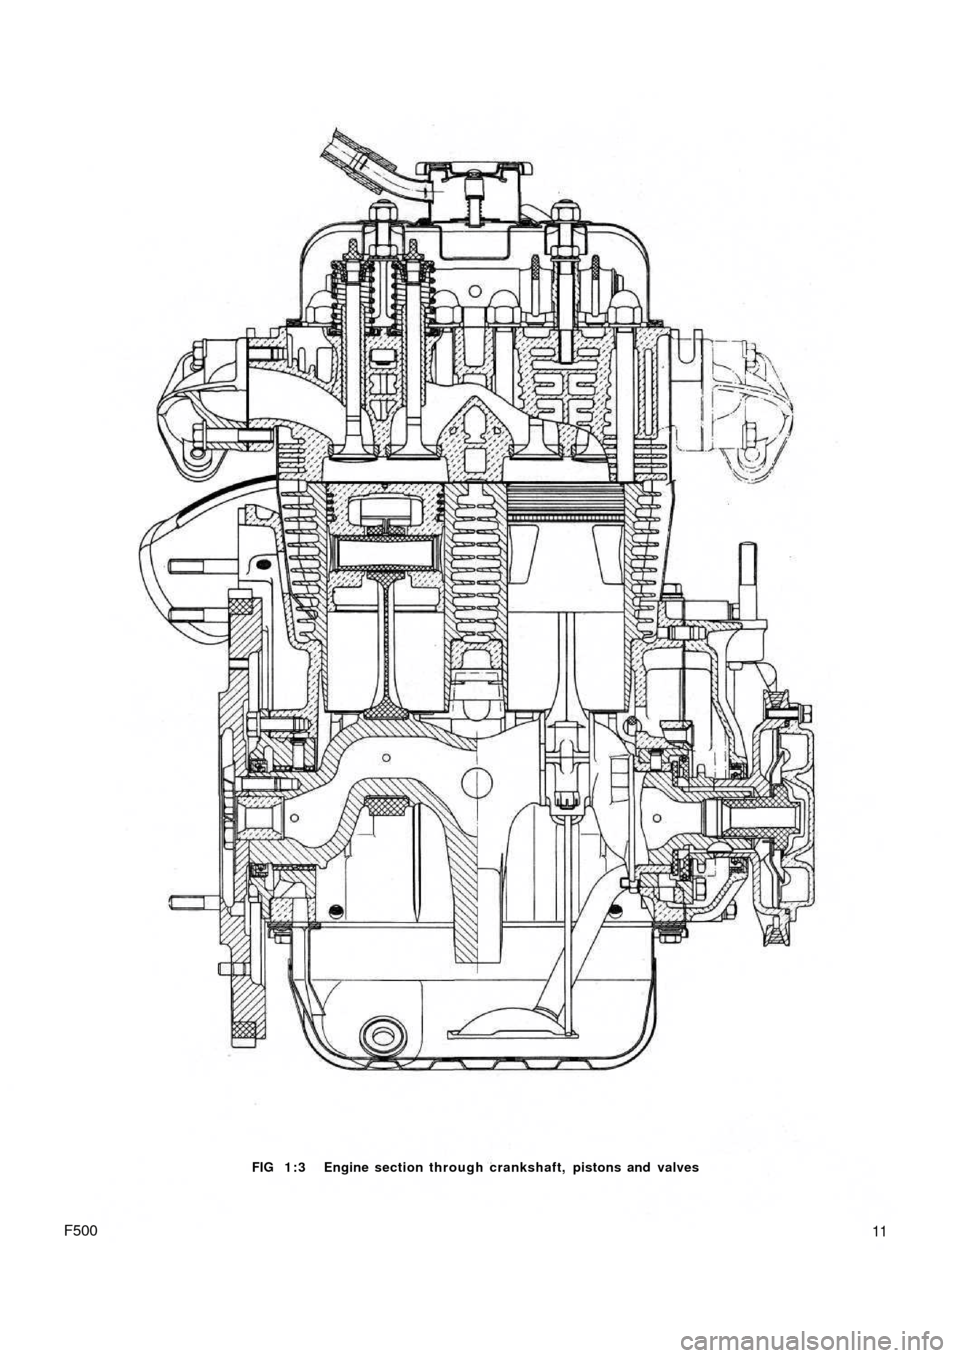 FIAT 500 1961 1.G Workshop Manual FIG 1 : 3  Engine section through crankshaft, pistons and  valves
F50011 